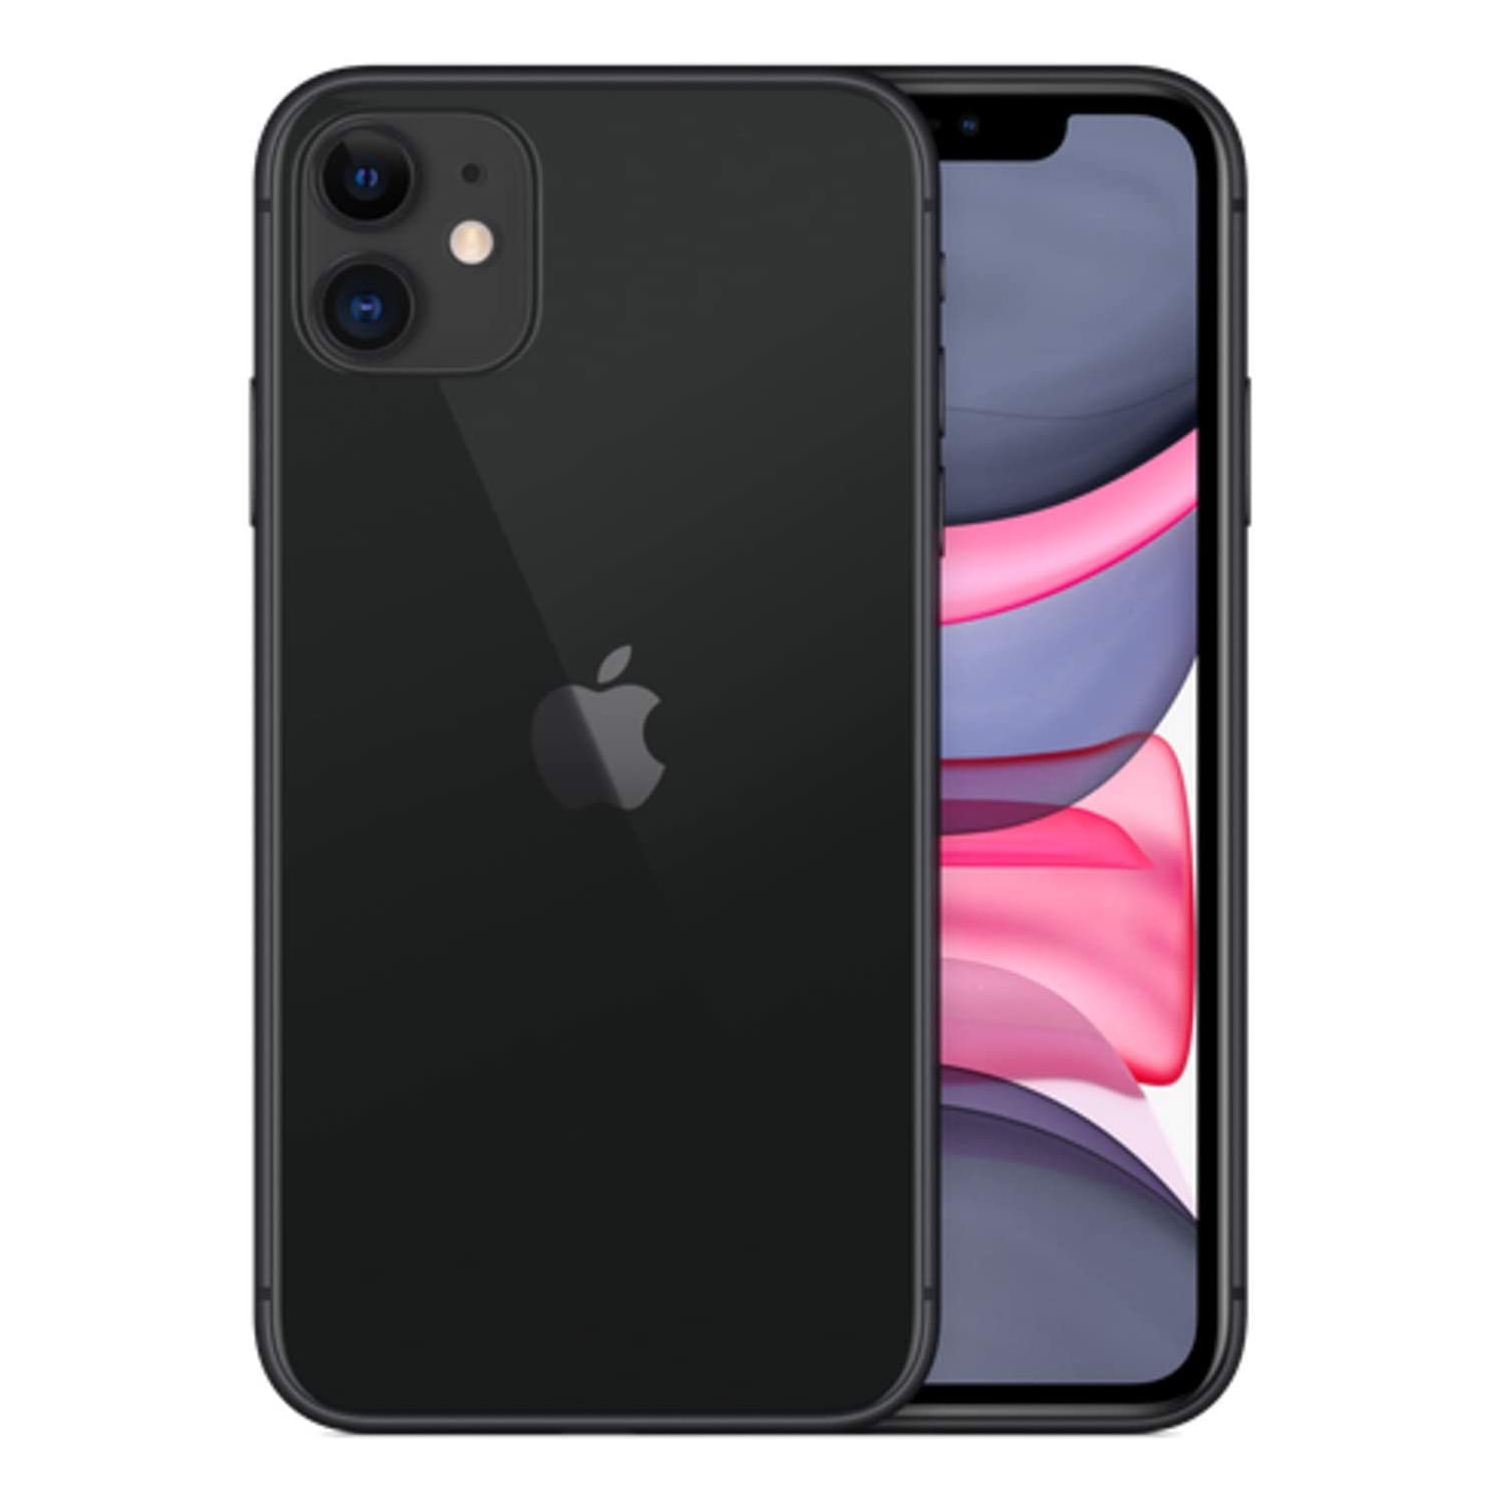 Refurbished (Excellent) - Apple iPhone 11 128GB Smartphone - Black - Unlocked - Certified Refurbished